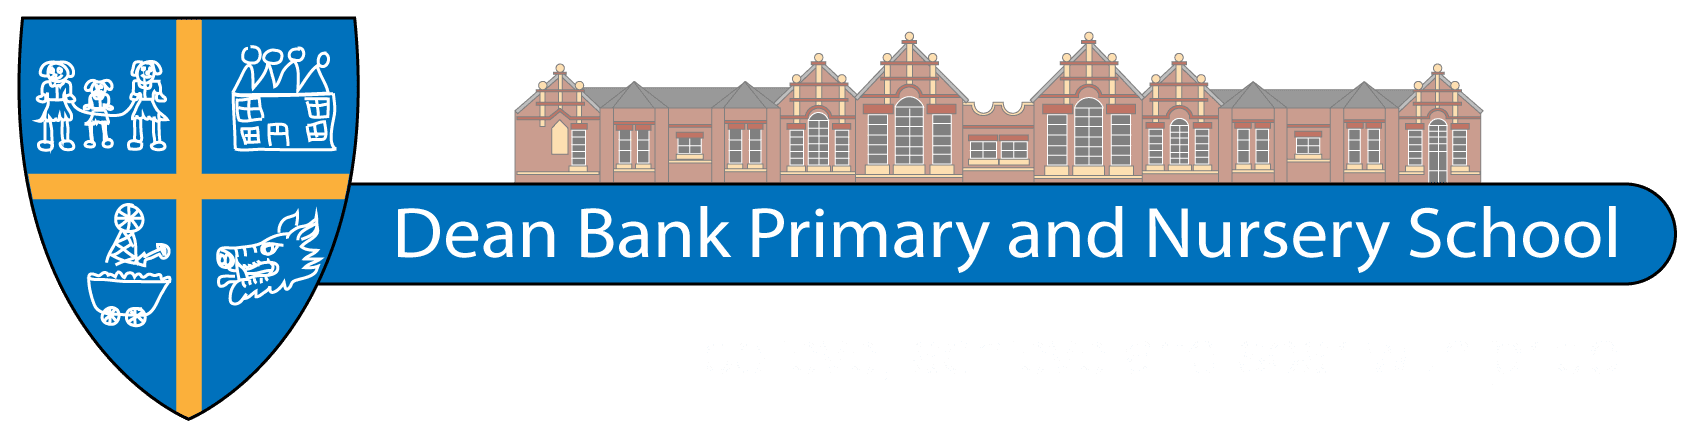  Dean Bank Primary and Nursery School